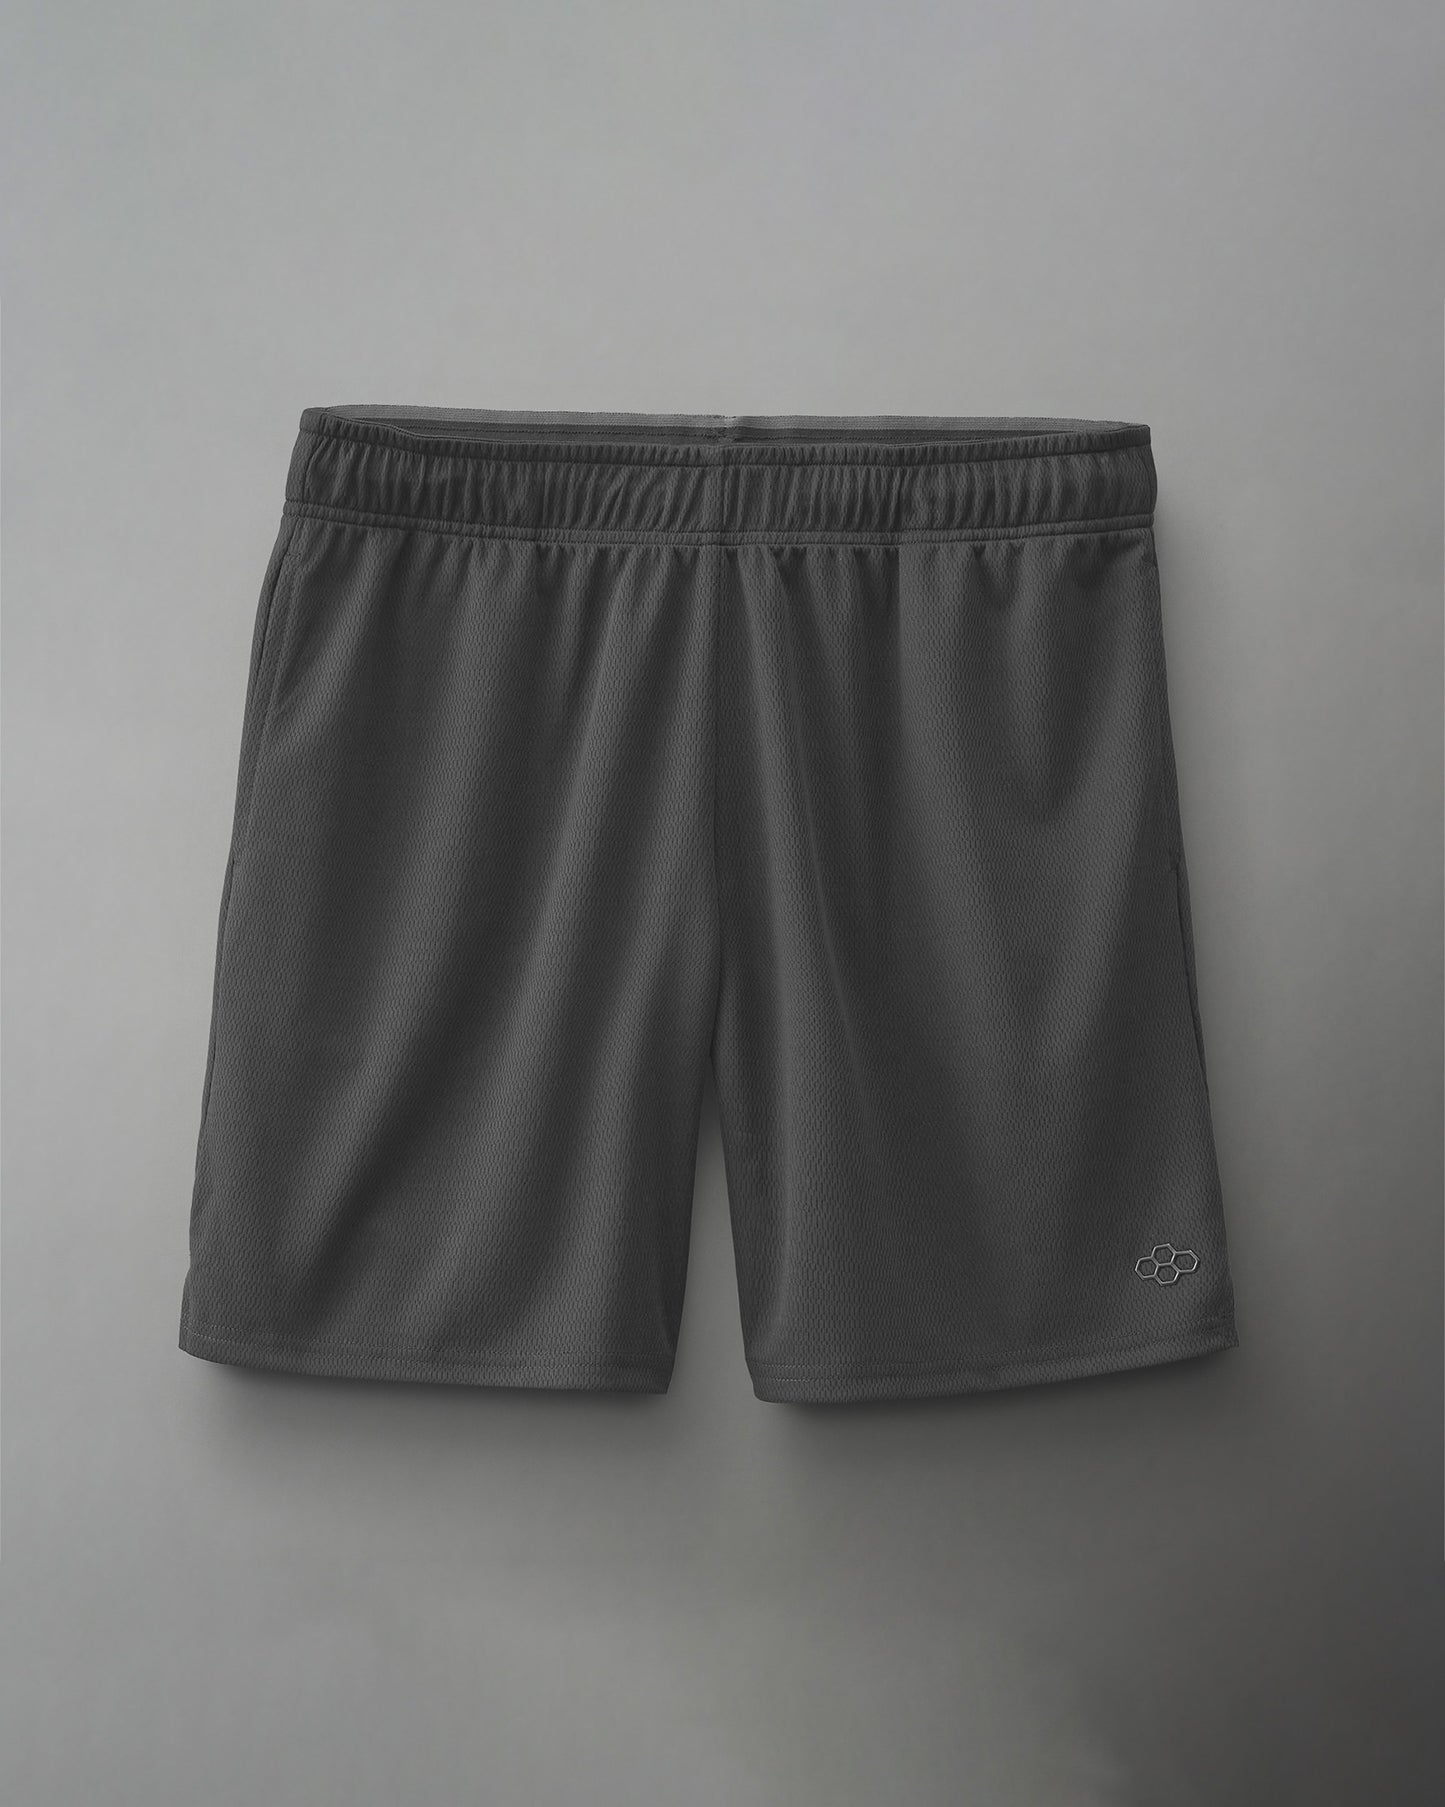 RUDIS 6" 2.0 Mesh Shorts - Carbon